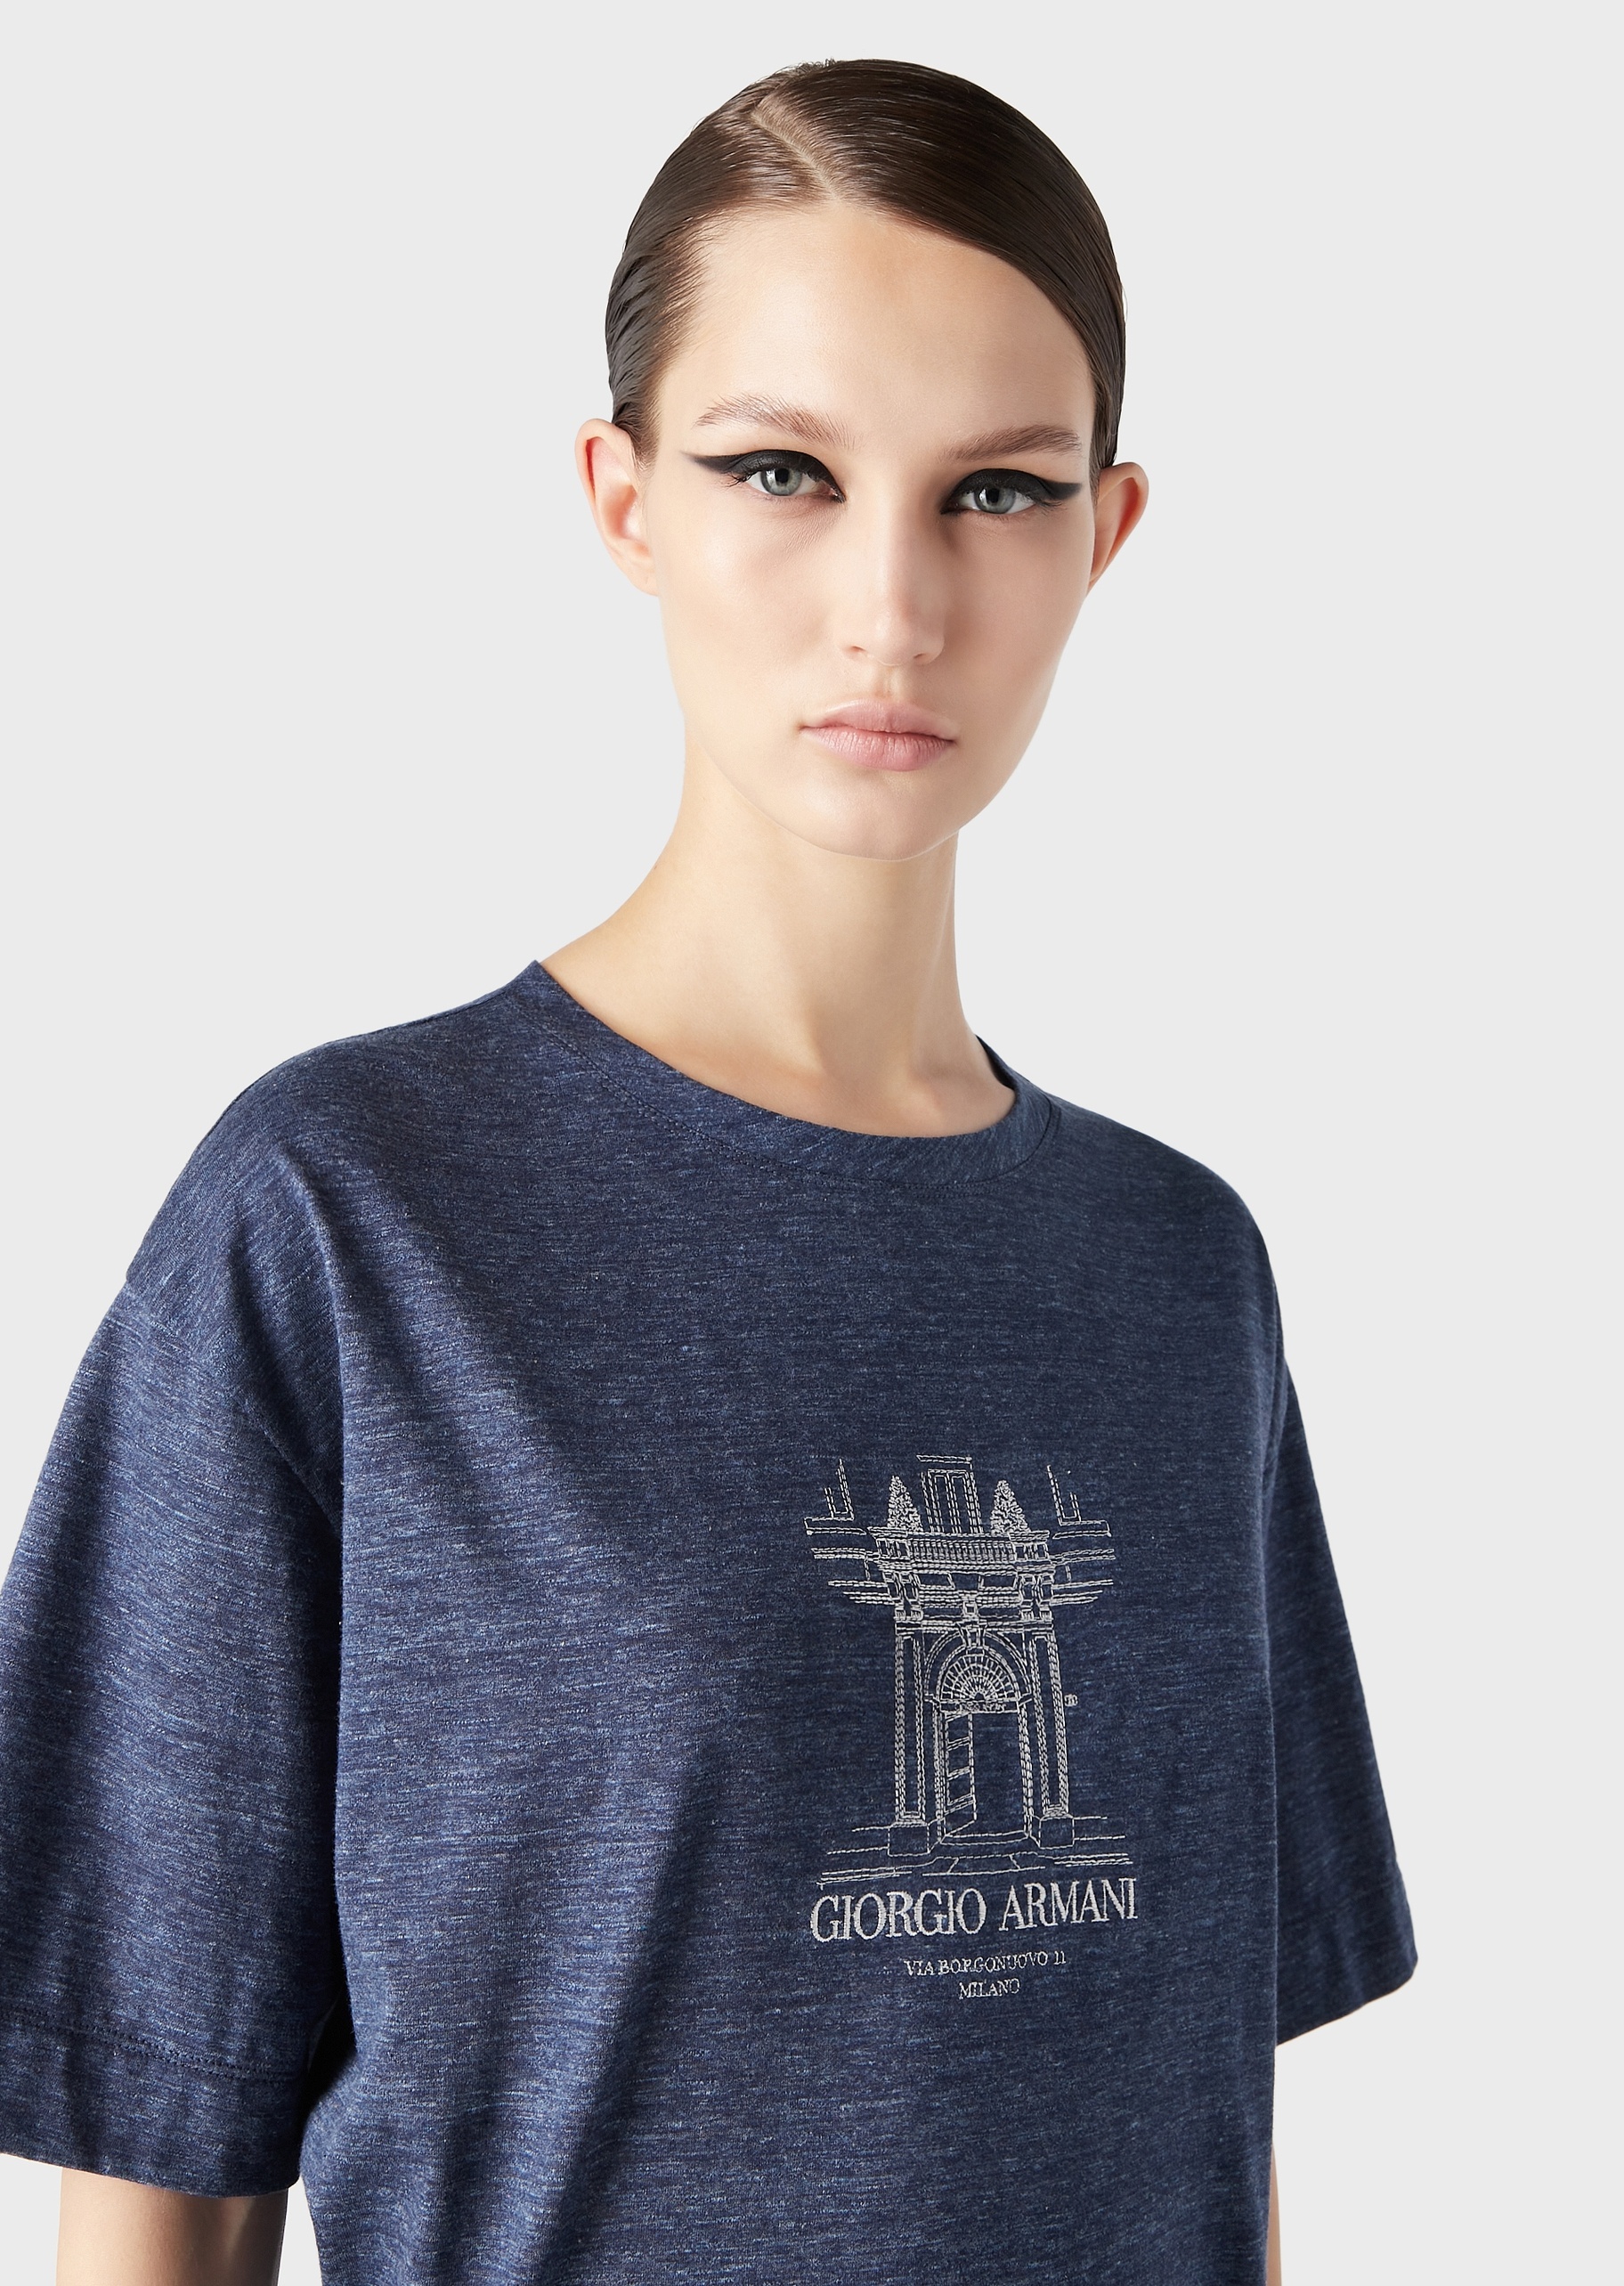 Giorgio Armani 刺绣宽松圆领T恤